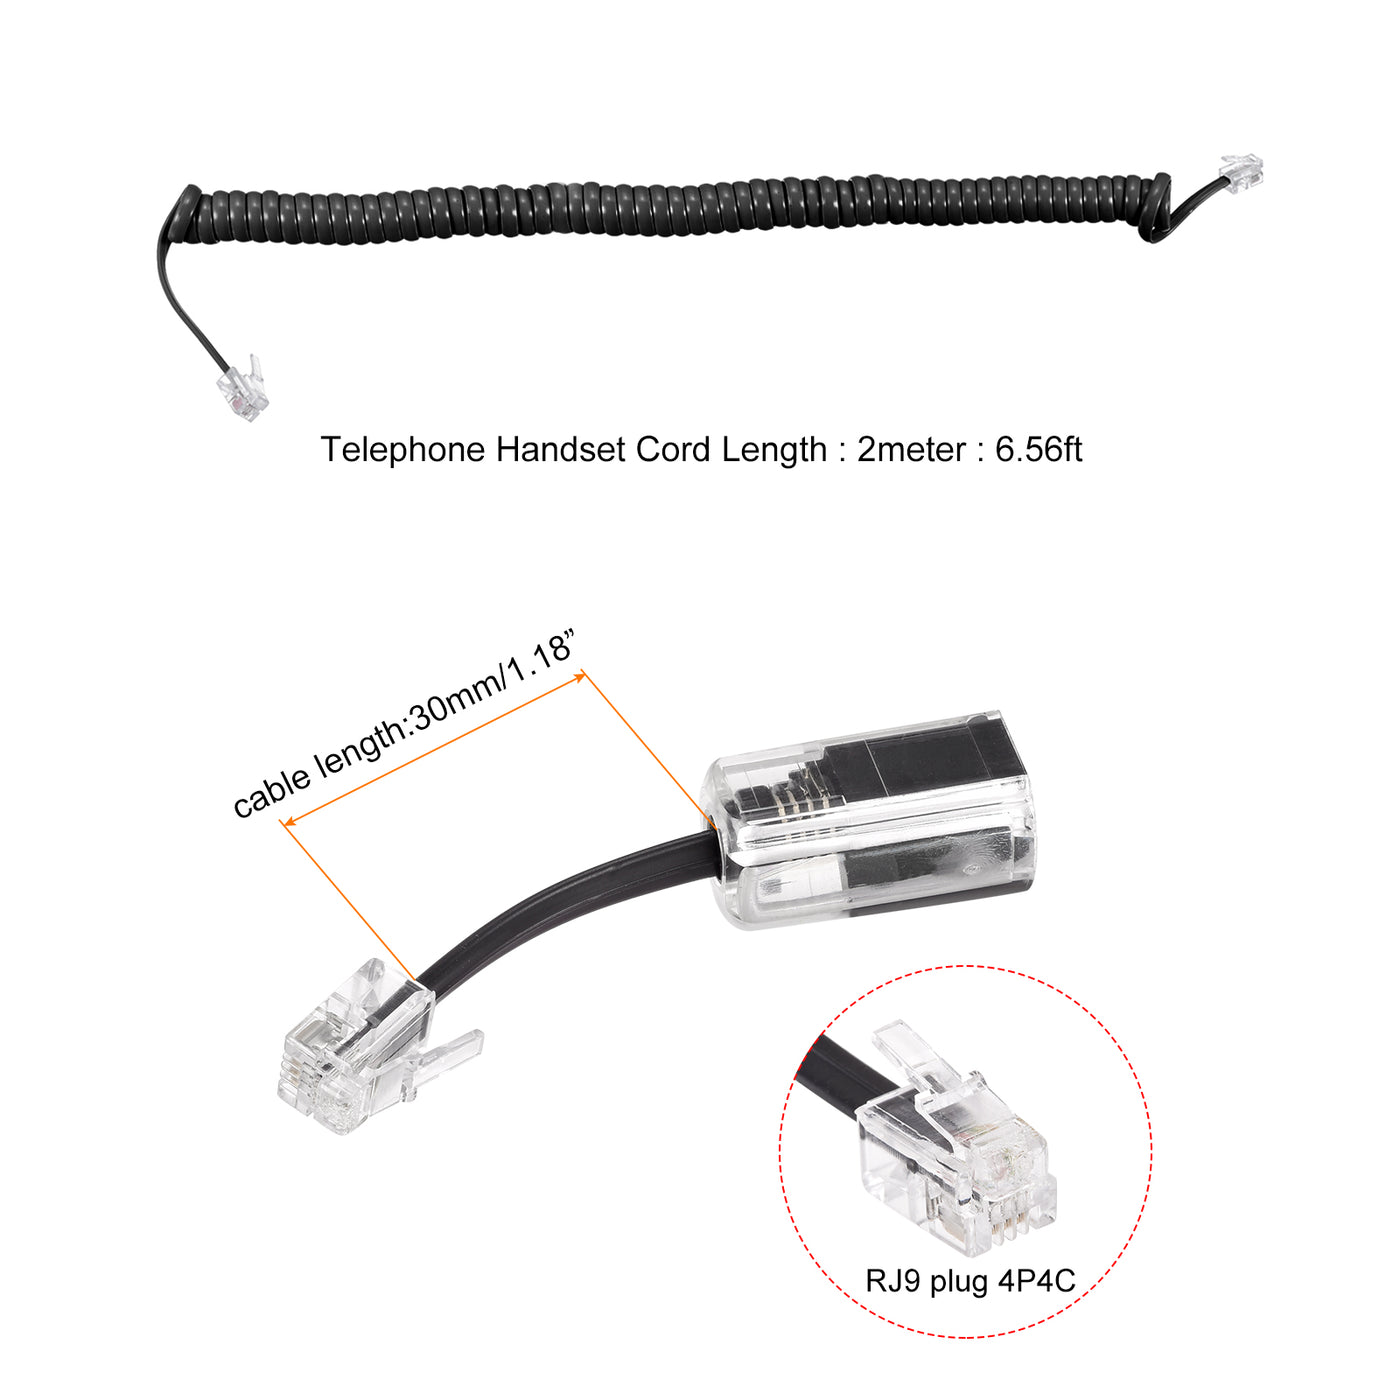 Harfington Telephone Cord Detangler 360 Degree Rotating Landline Cable with Telephone Handset Cord 2Set